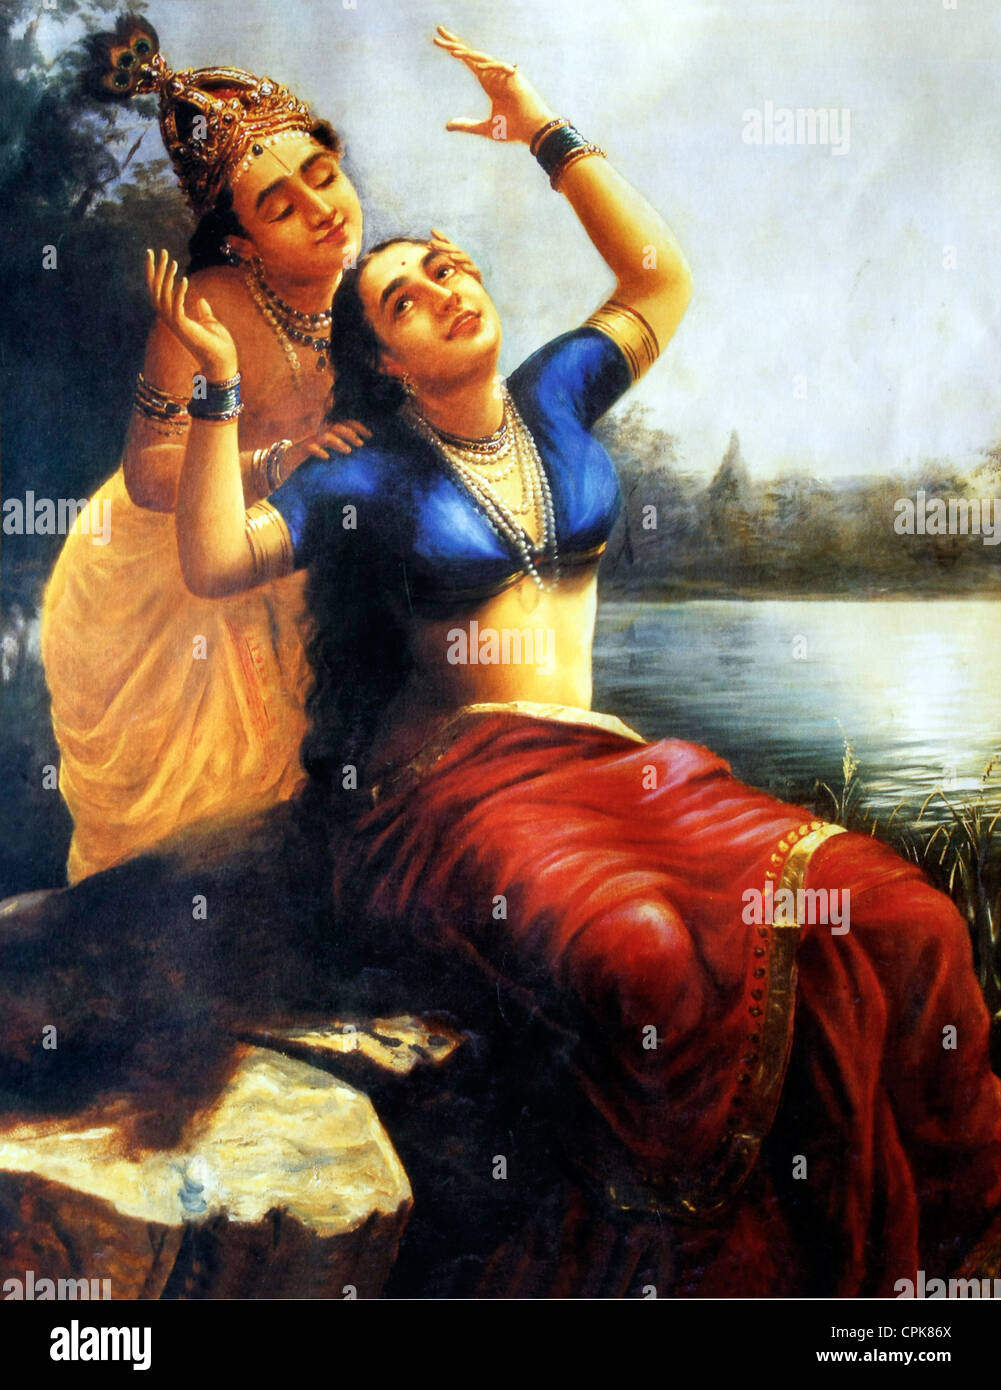 A painting by Raja Ravi Varma 'Radha Madhavam' - Love scene of Sri Krishna and Radha Stock Photo